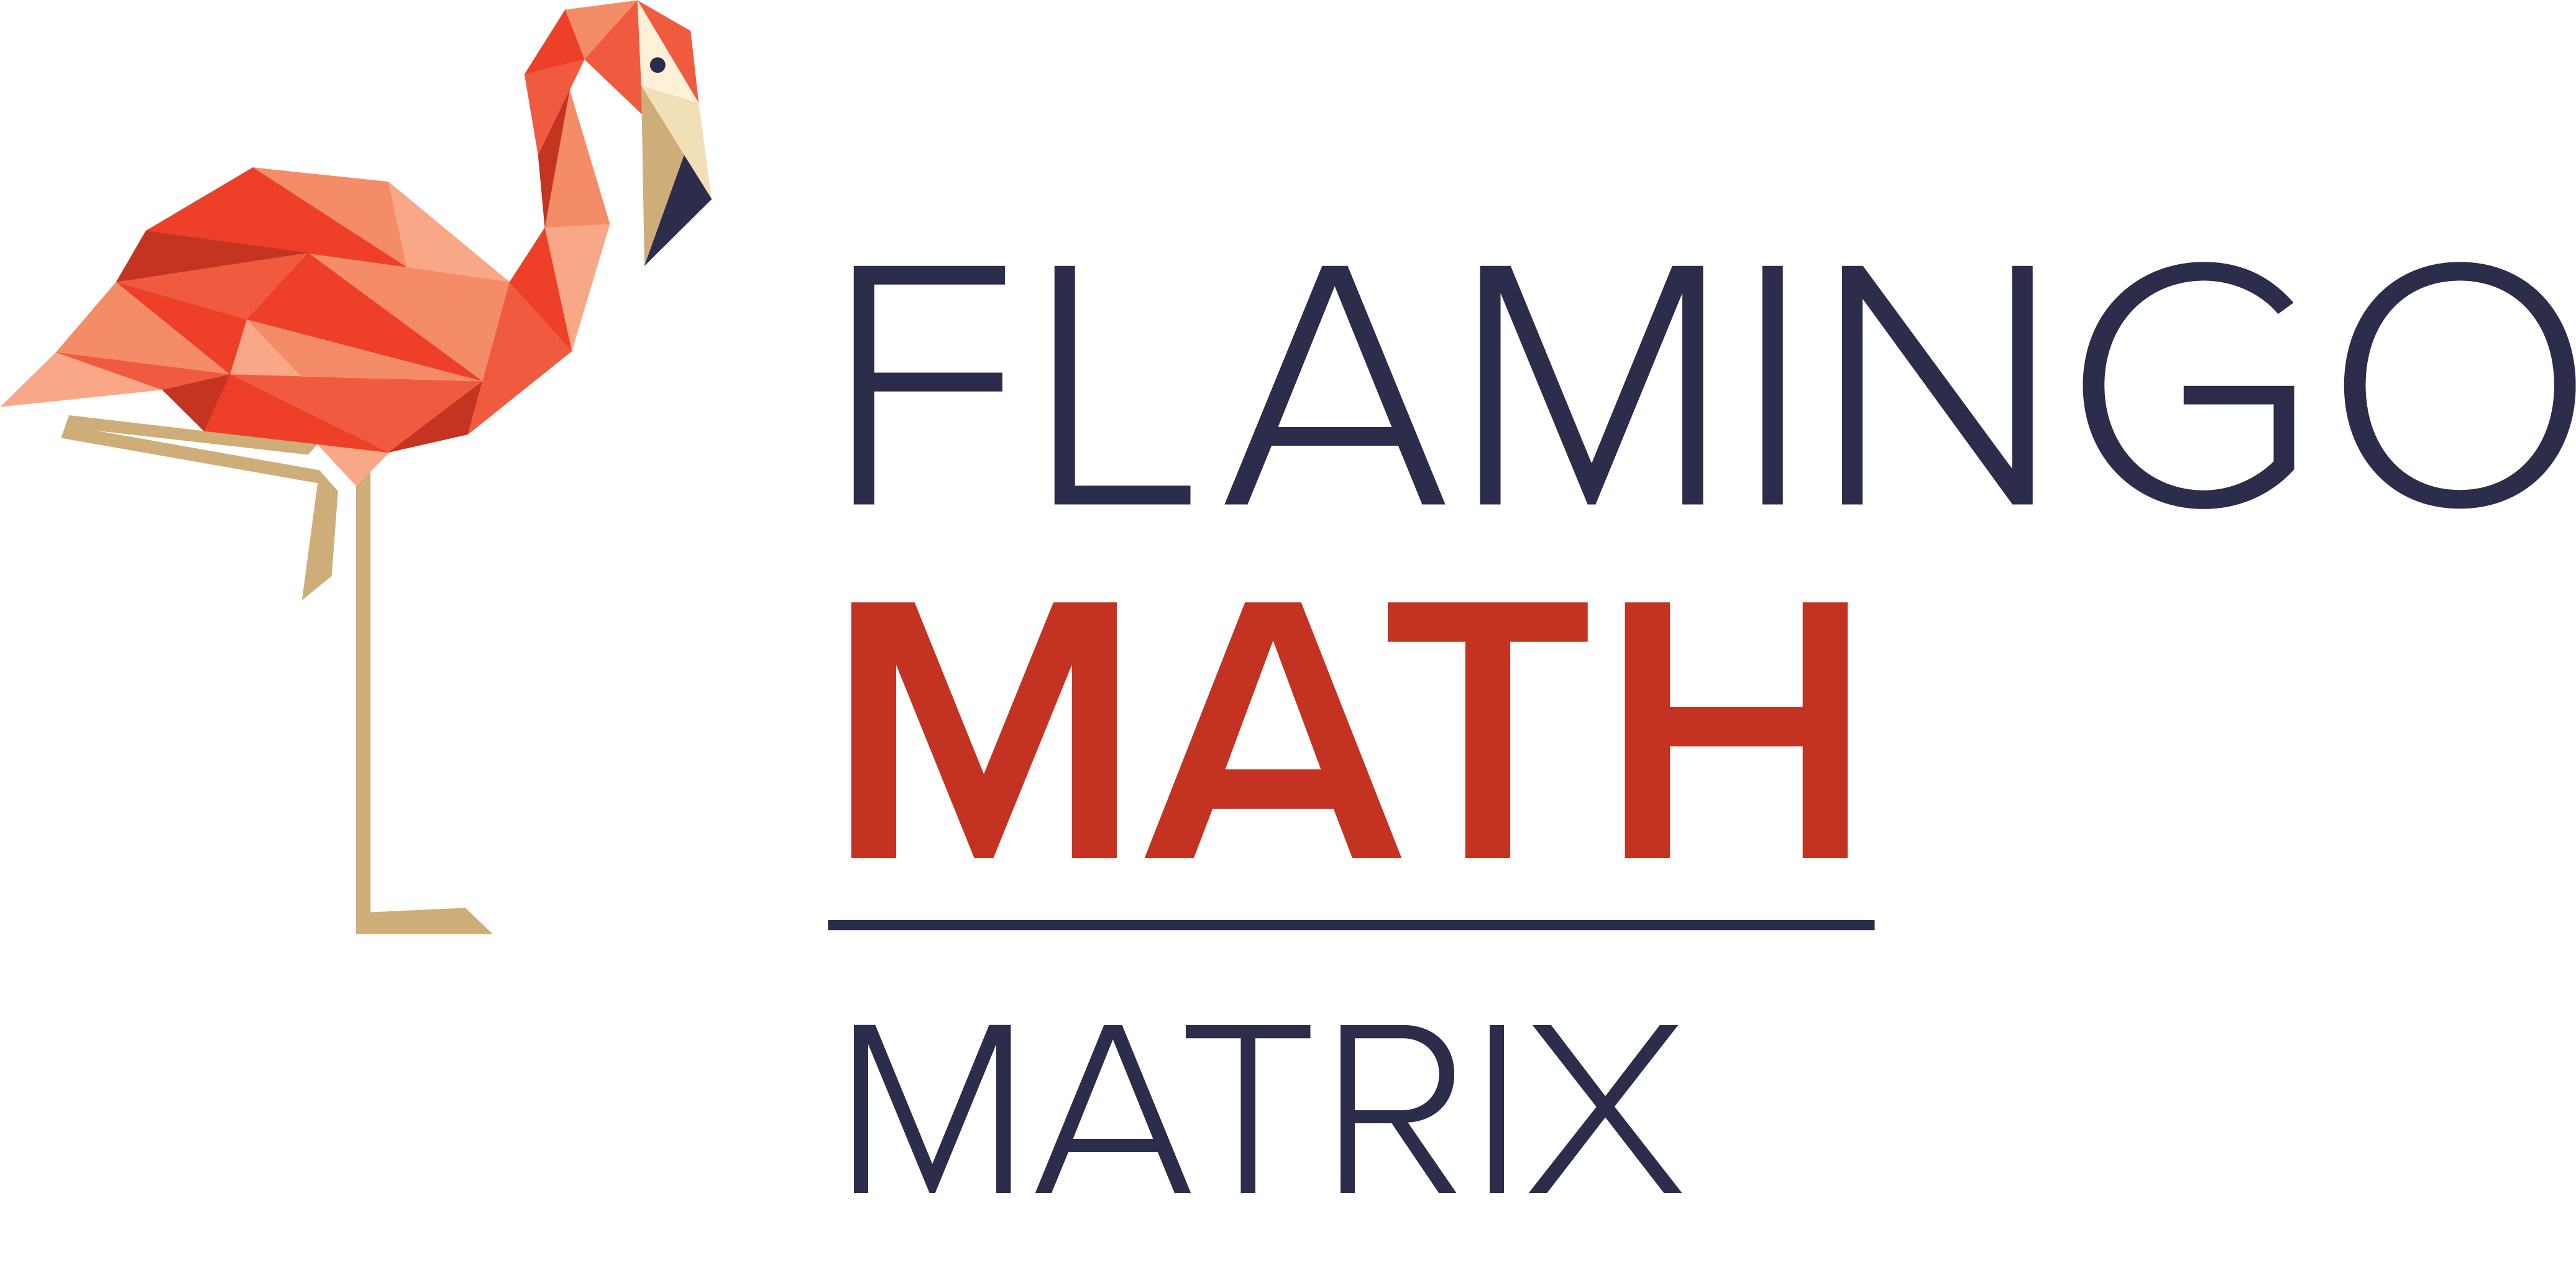 Flamingo Math Matrix